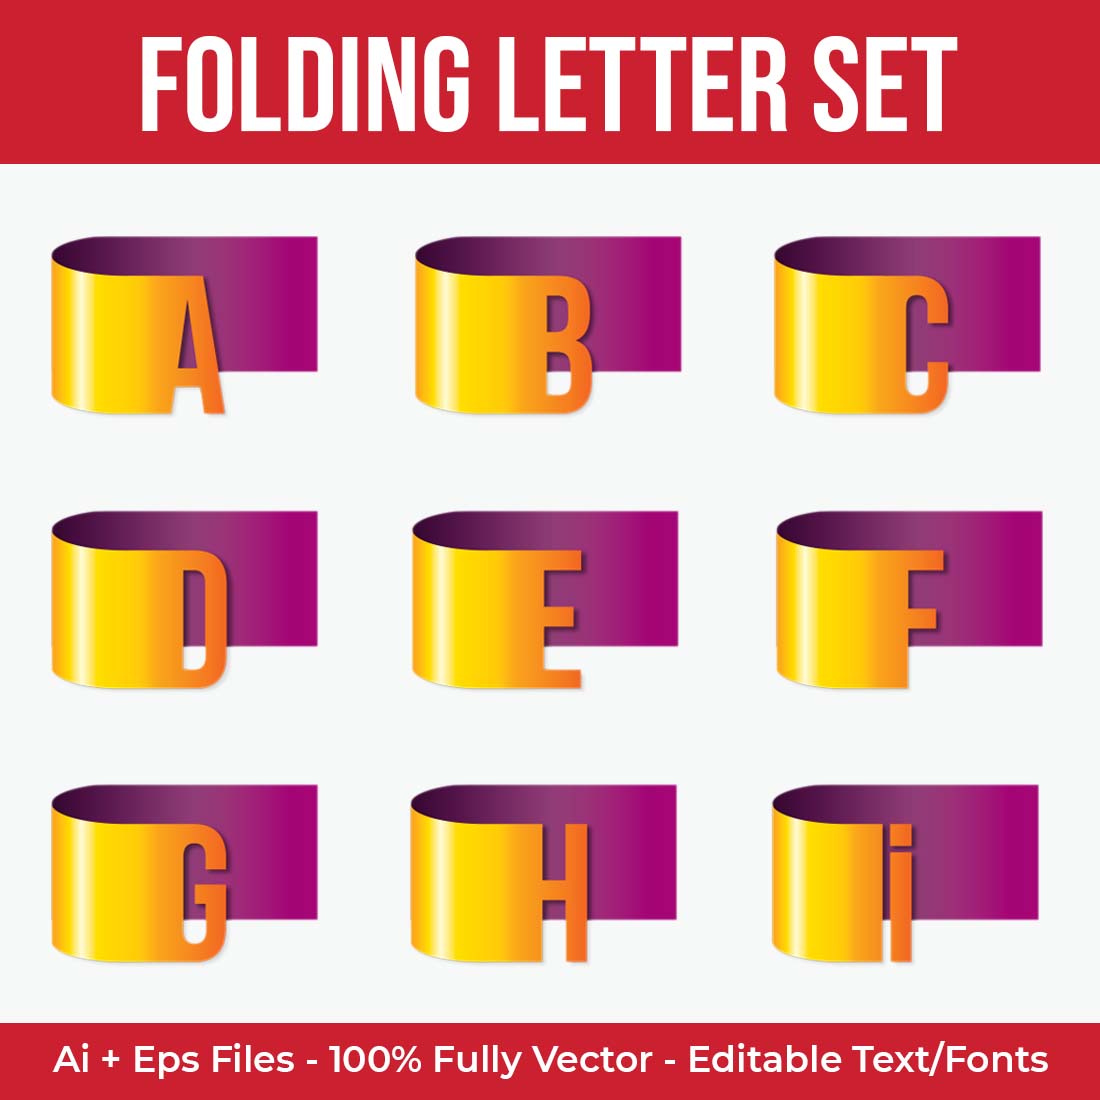 Folding Letter Logo Set cover image.